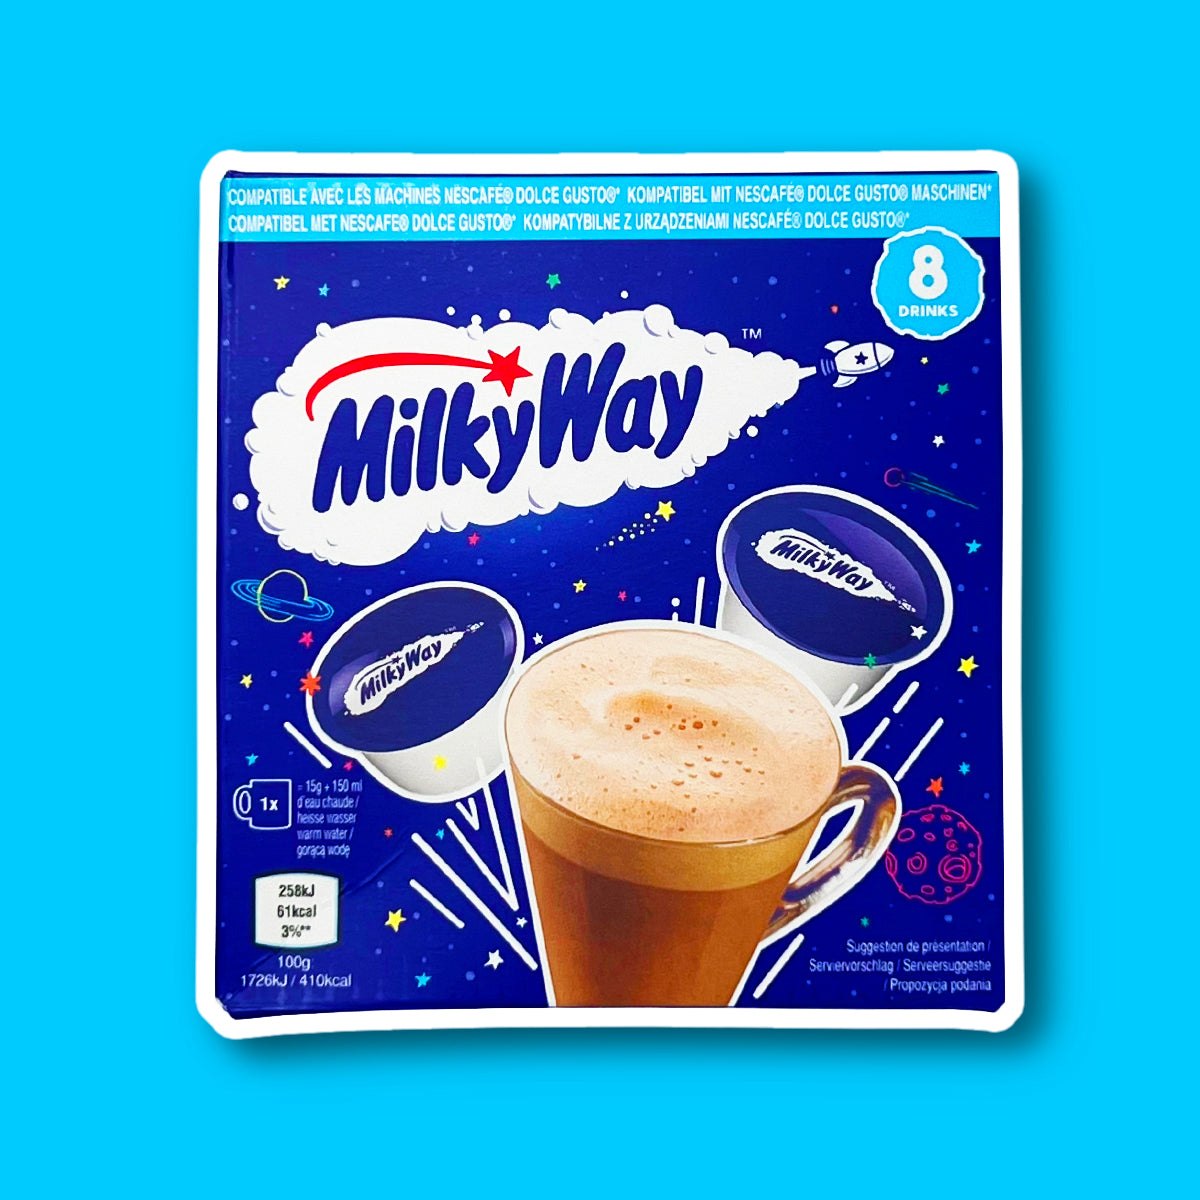 Nescafé Pods Dolce Gusto Milky Way chez My American Shop